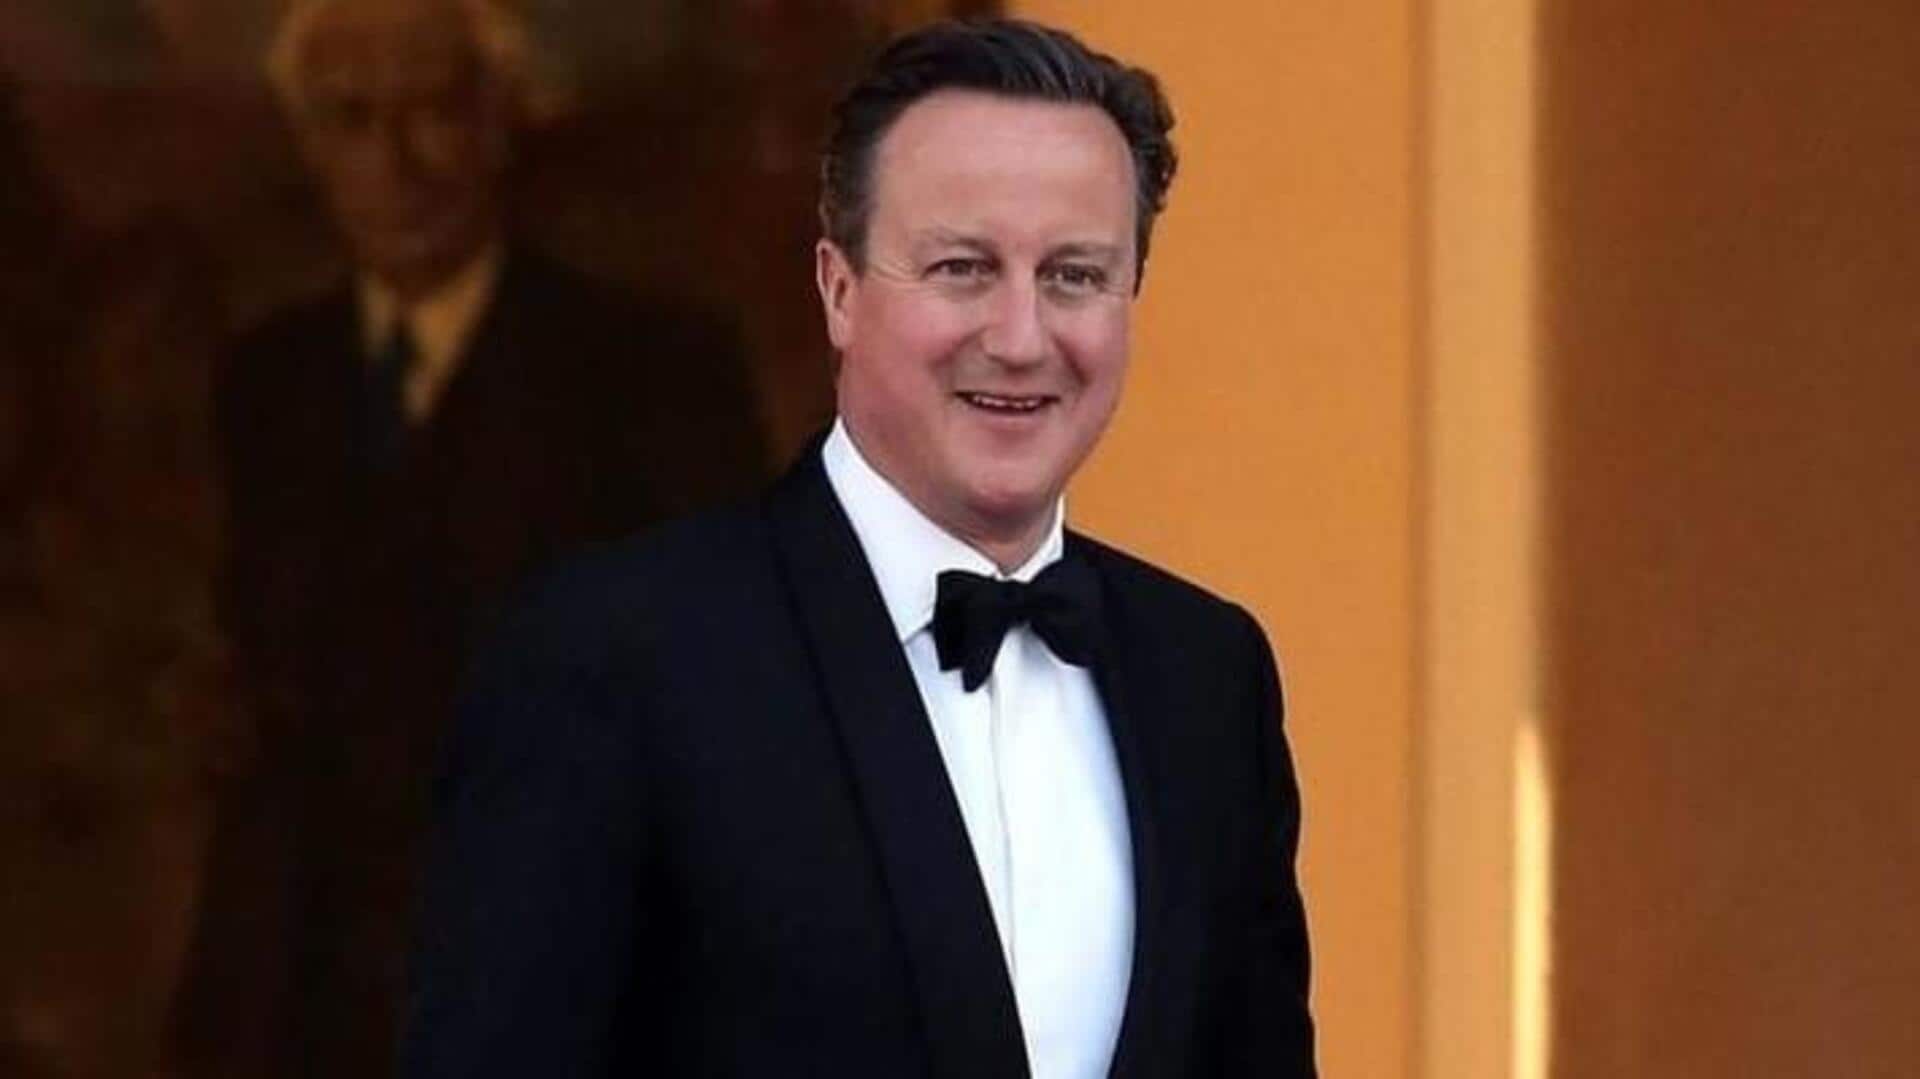 UK: David Cameron is new foreign secretary